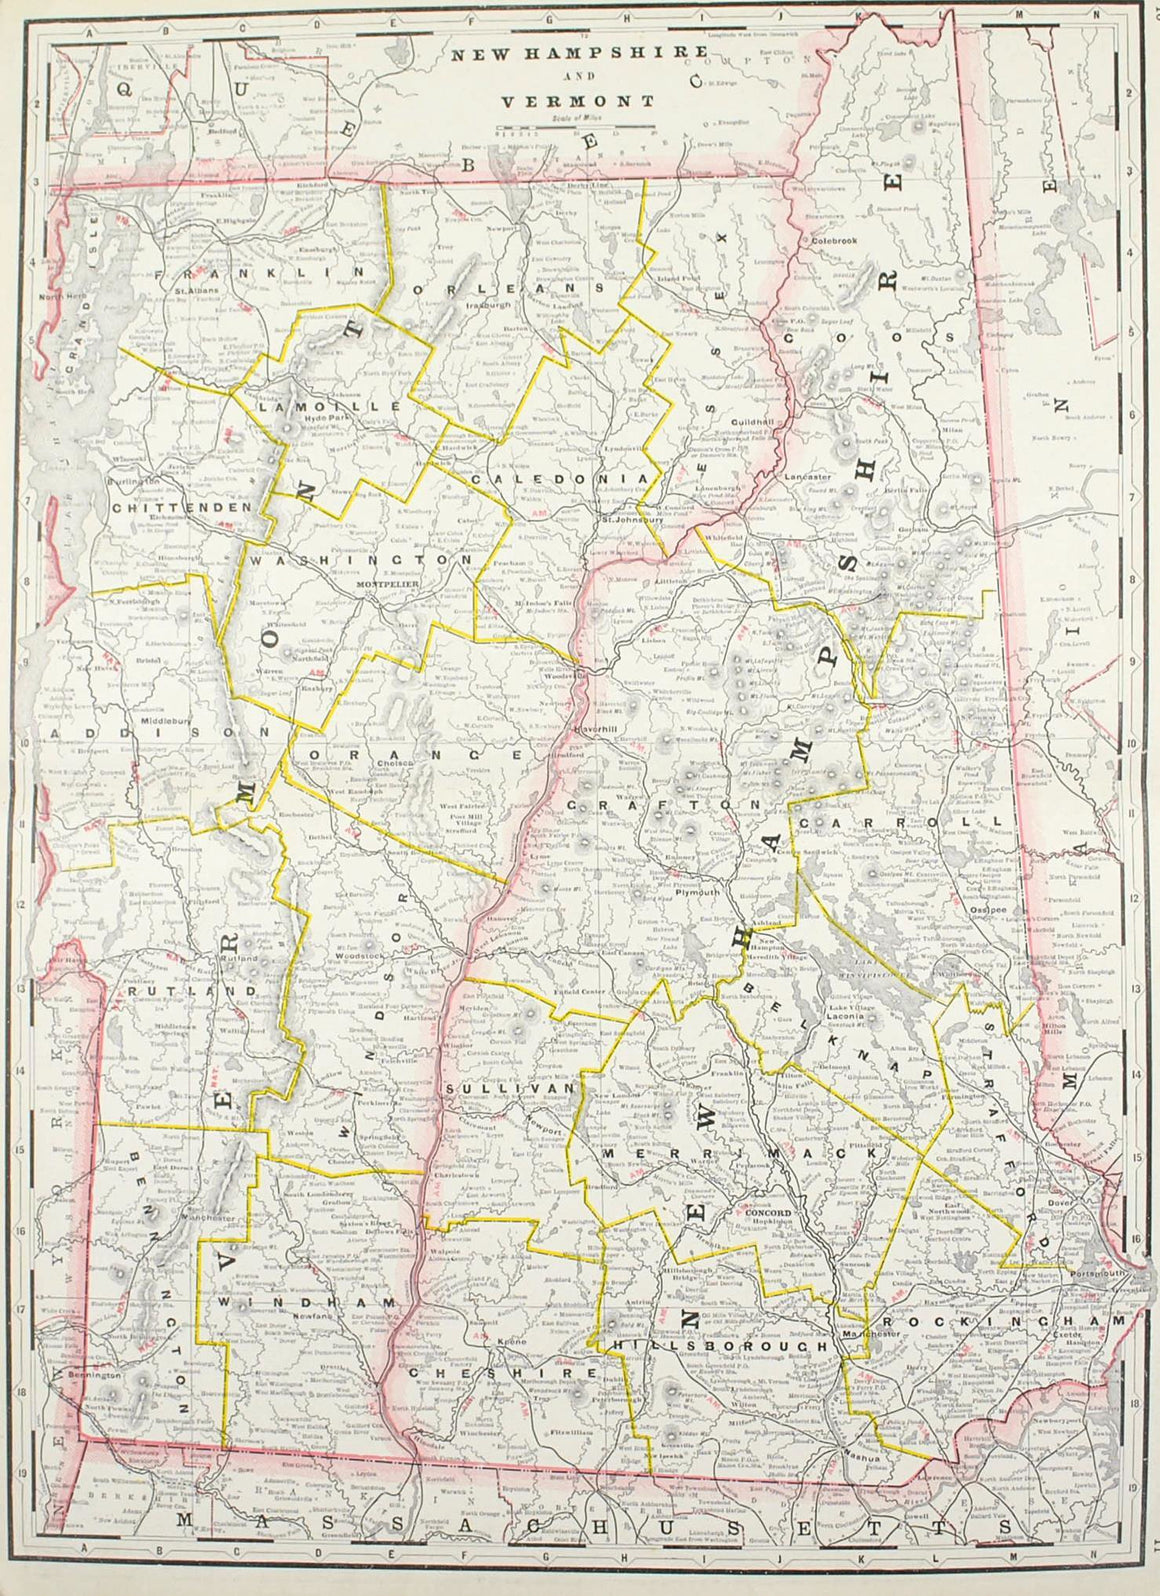 1887 New Hampshire and Vermont - Cram